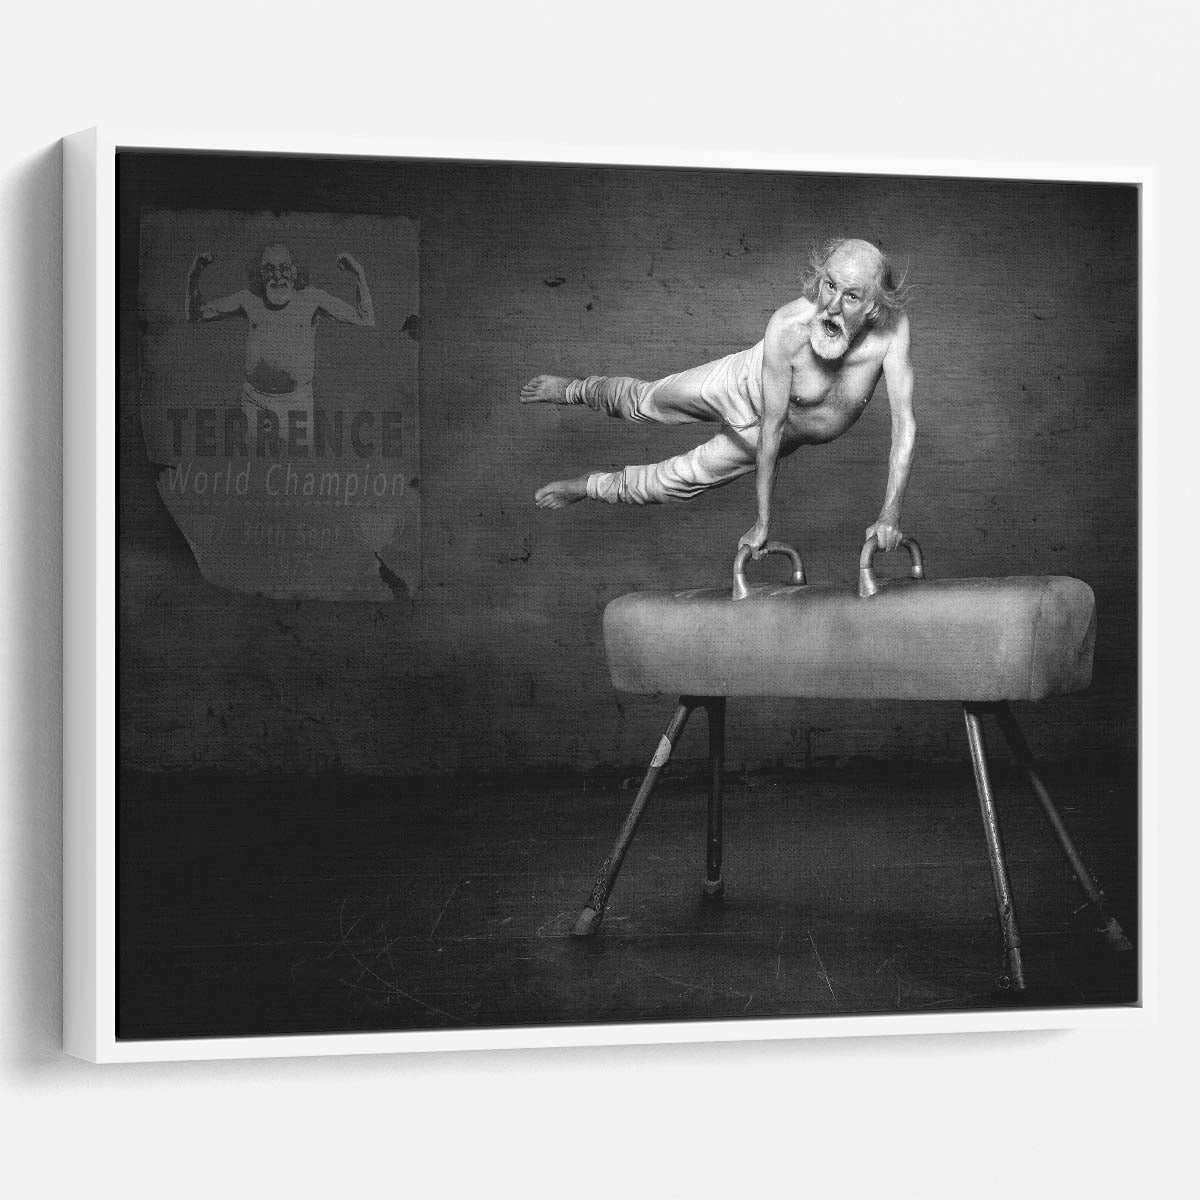 Speedy Senior Gymnast Humorous Monochrome Wall Art by Luxuriance Designs. Made in USA.